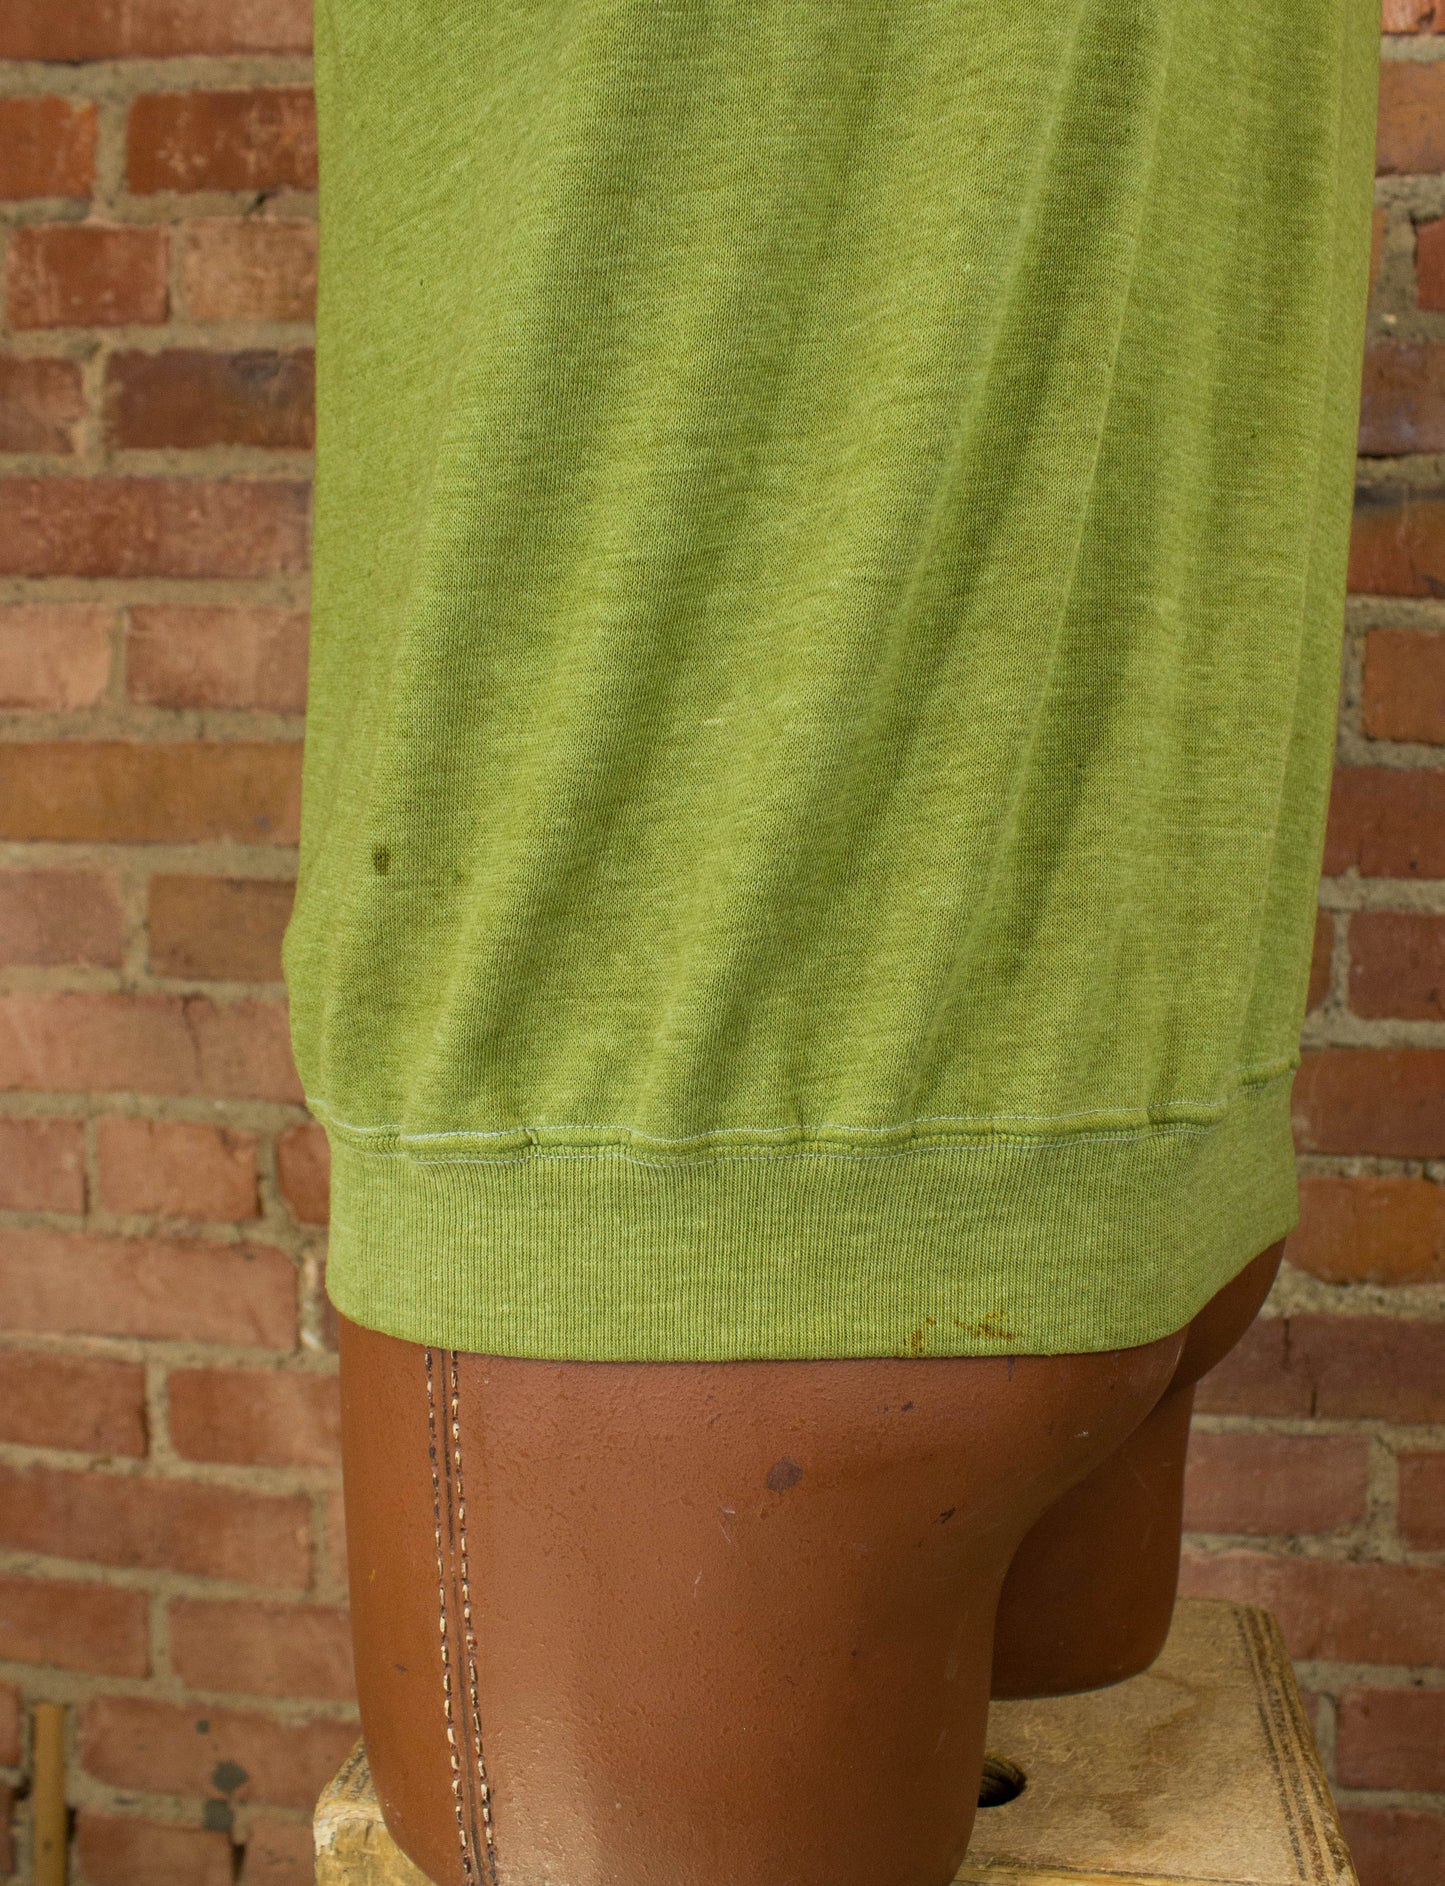 Vintage Wally Heider Recording Short Sleeve Sweatshirt 1969 Sage Green and Yellow Raglan Sleeve Medium-Large